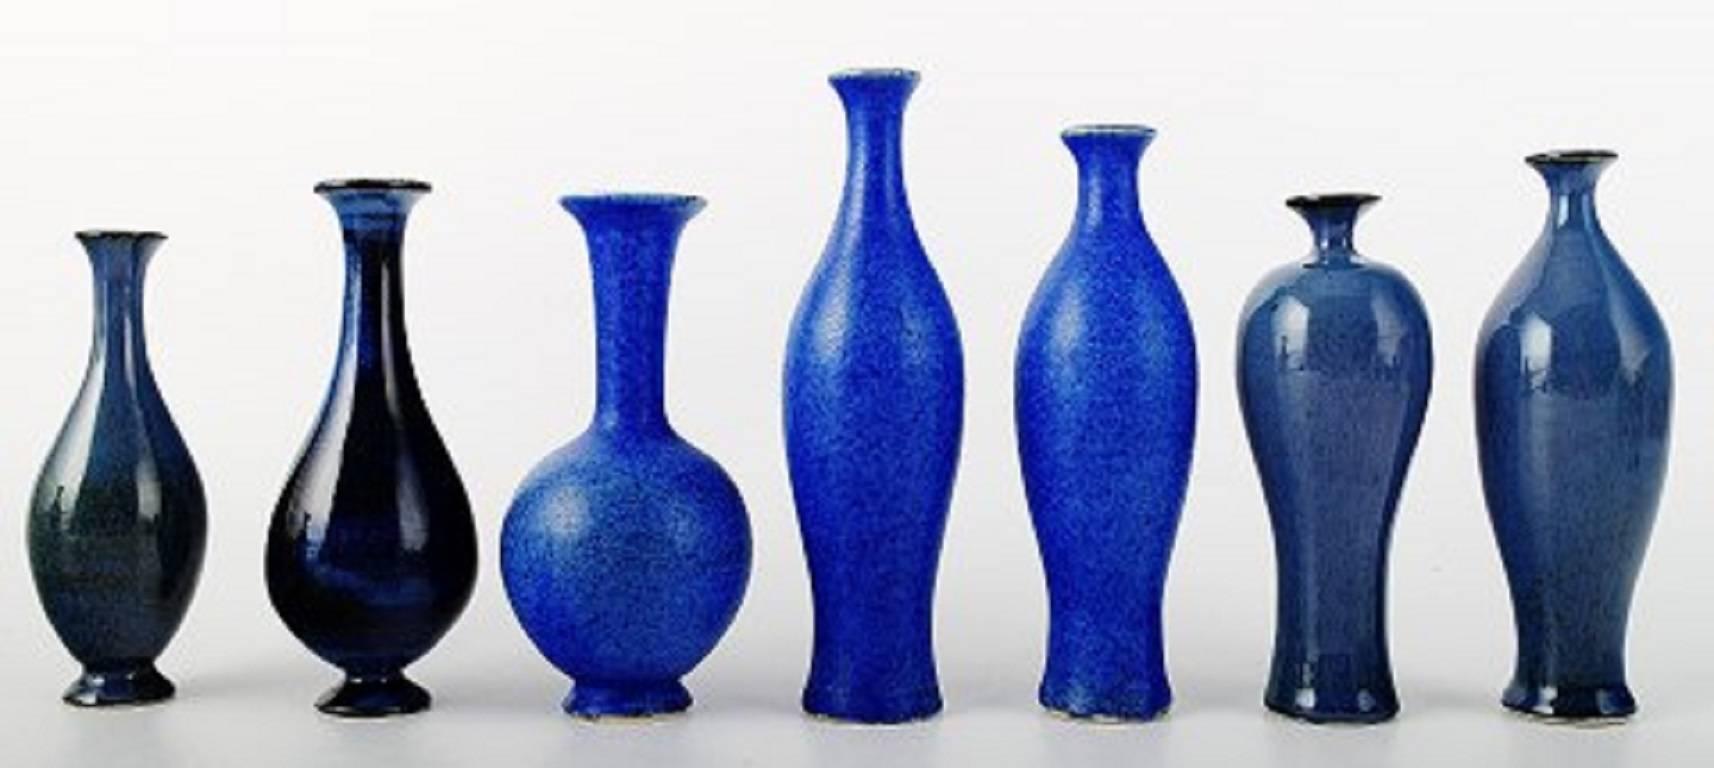 Scandinavian Modern Collection of 14 Unique Miniature Ceramic Vases by Per Liljegren